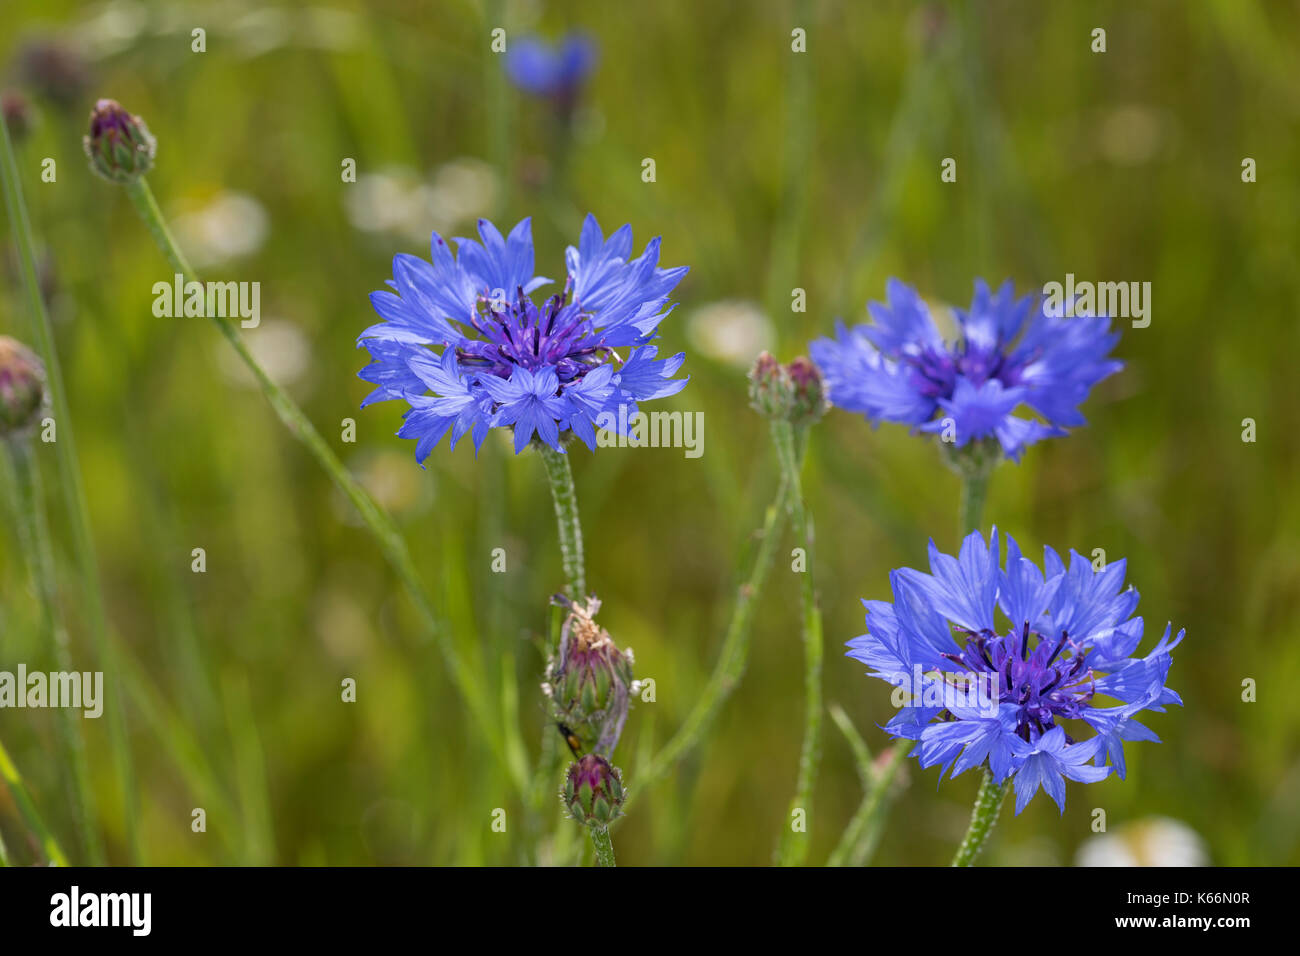 Kornblume, Korn-Blume, Zyane, Cyanus segetum, Centaurea cyanus, Cornflower, Bachelor´s Button, Le Bleuet, Centaurée bleuet Stock Photo